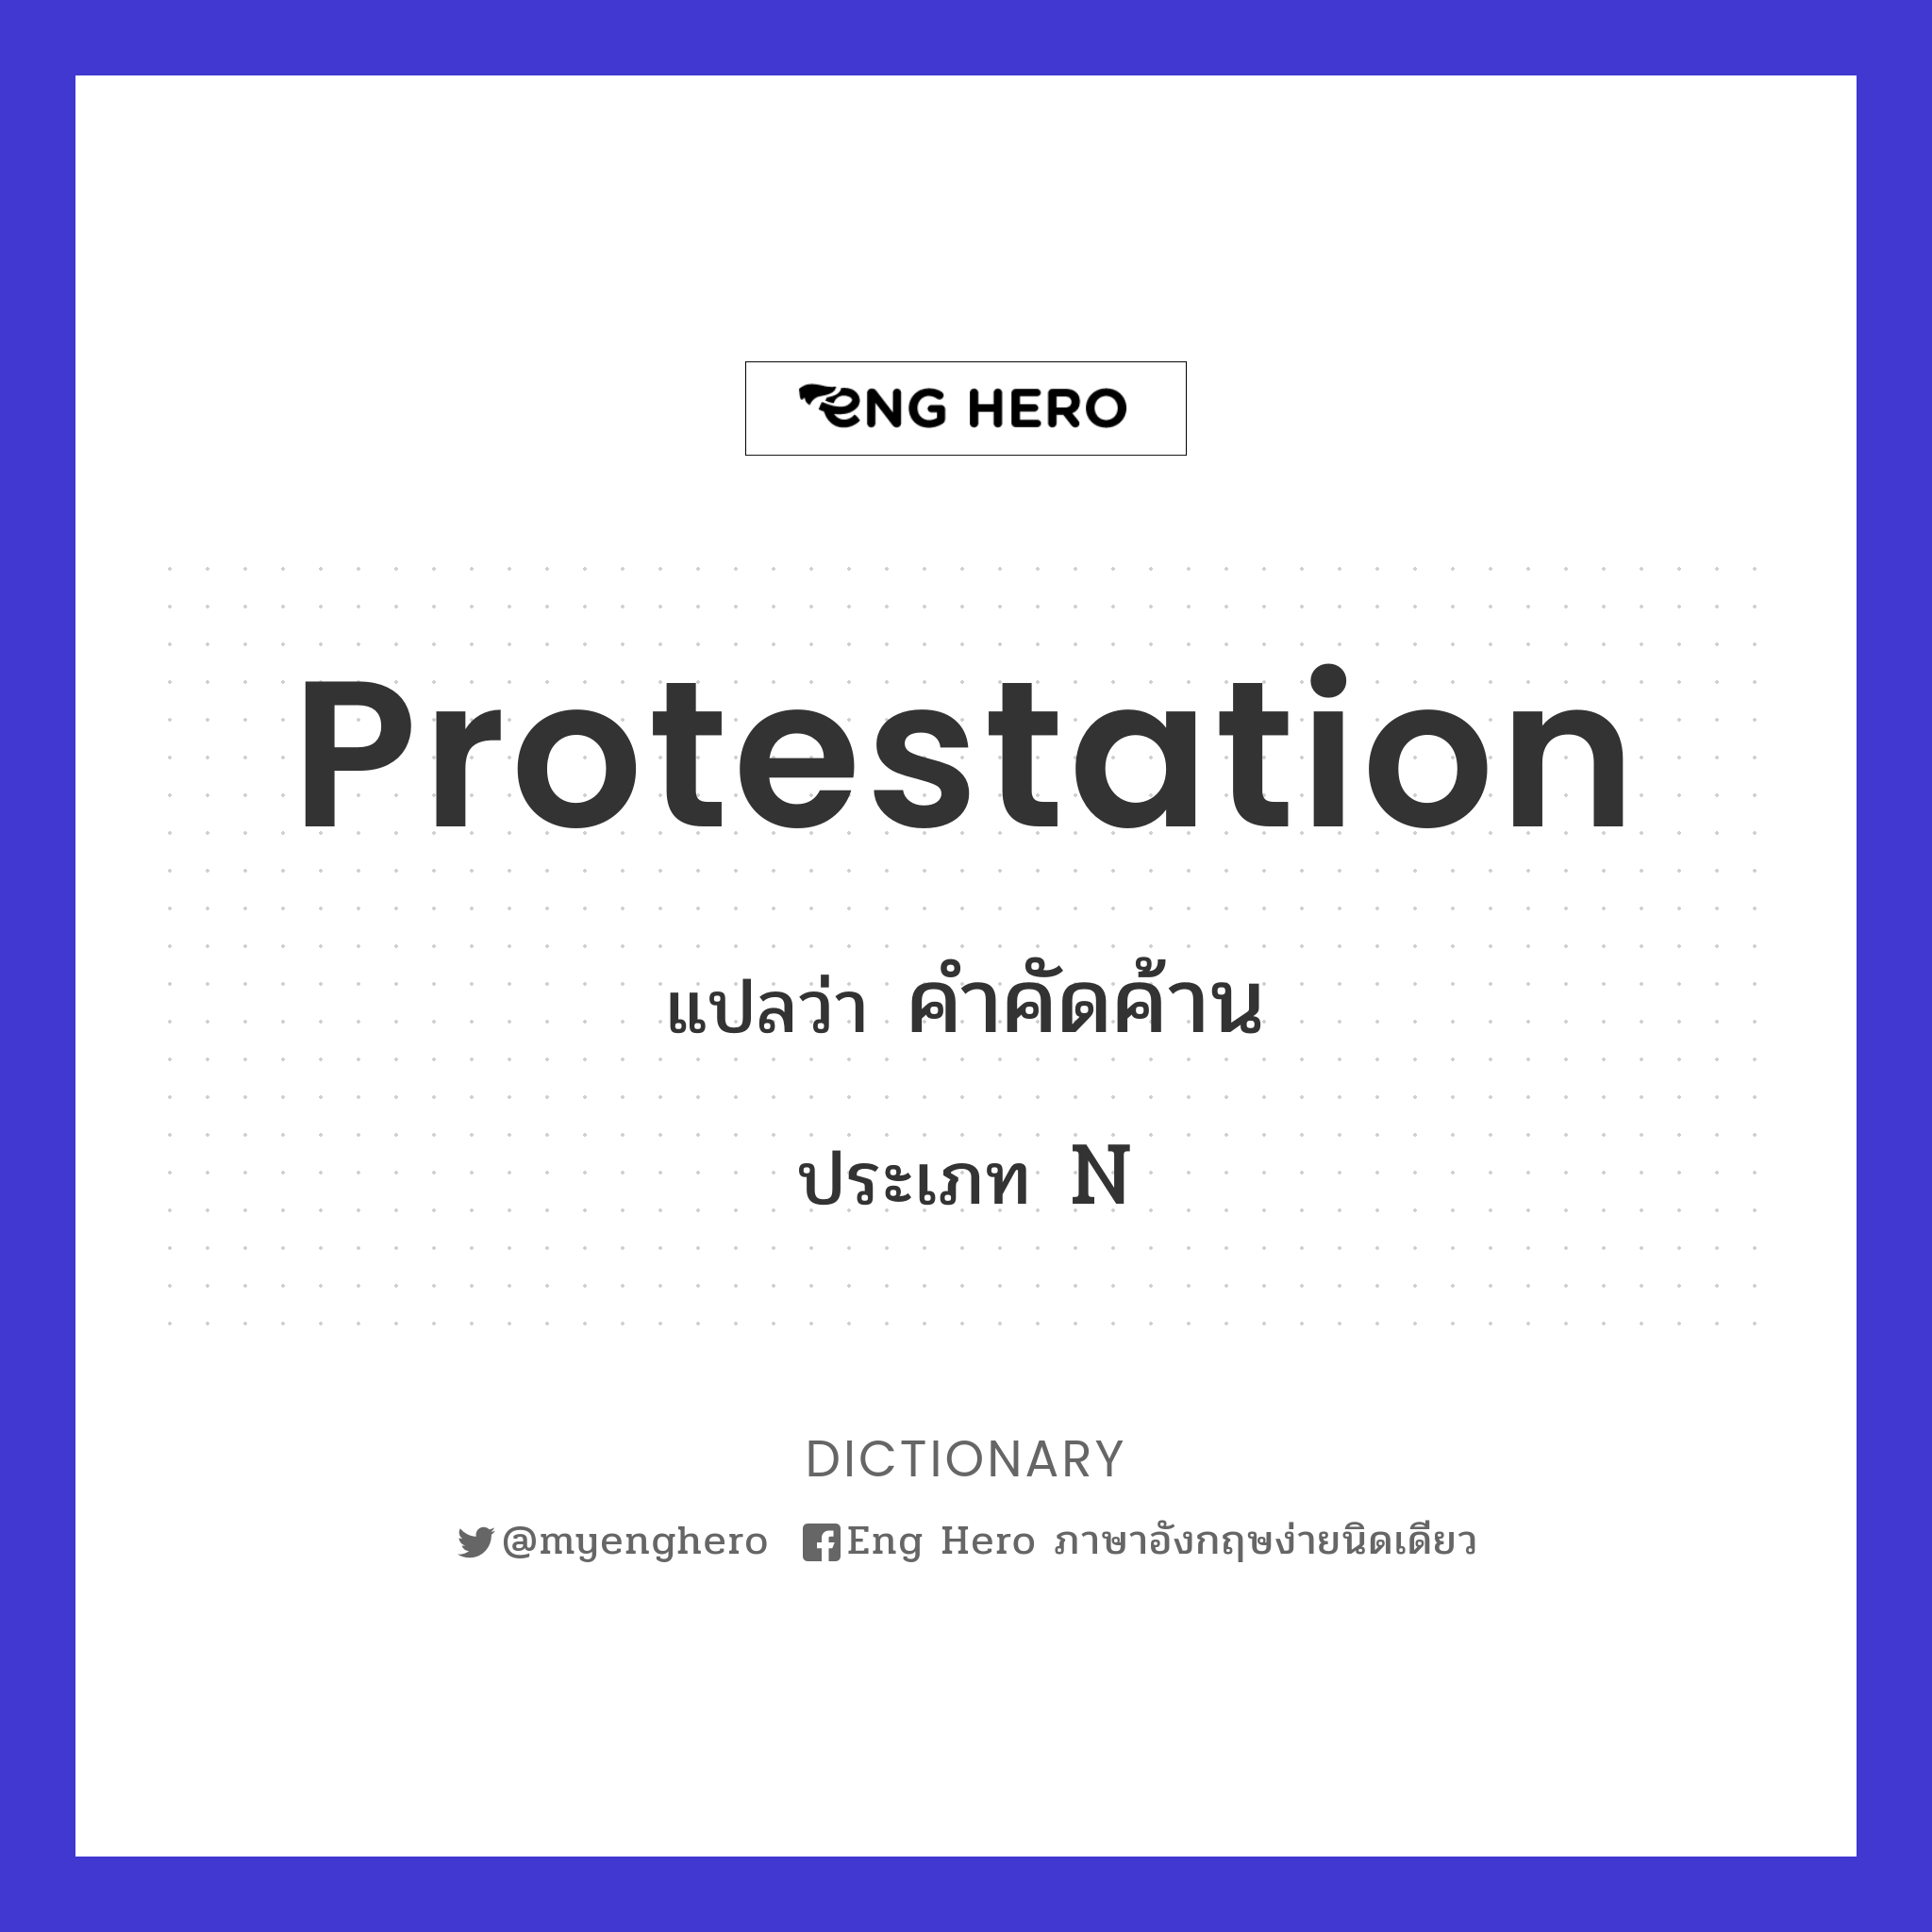 protestation